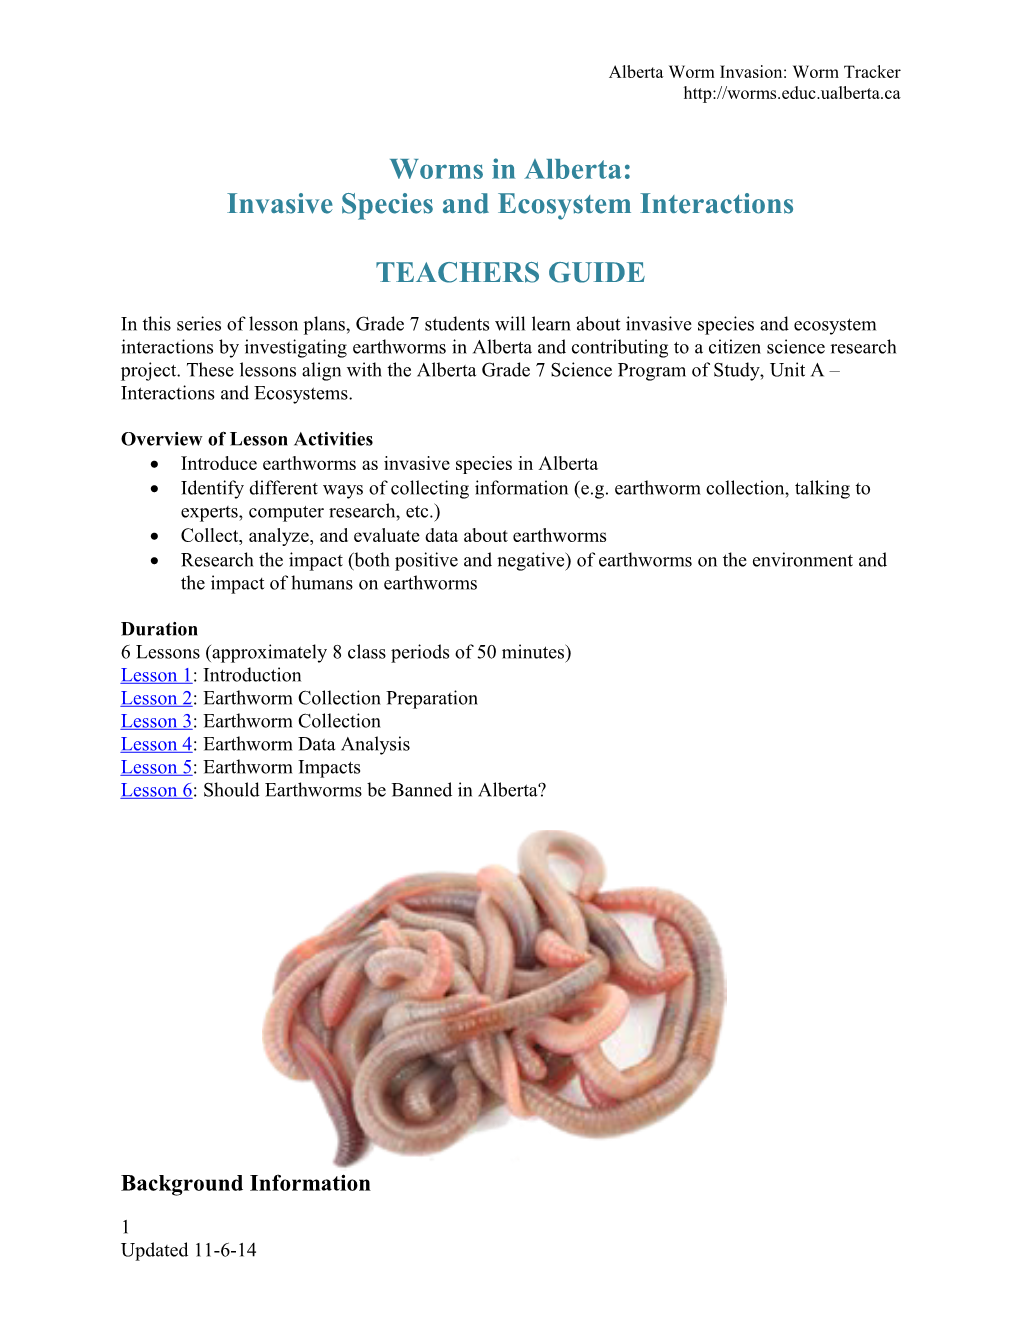 Invasive Species and Ecosystem Interactions